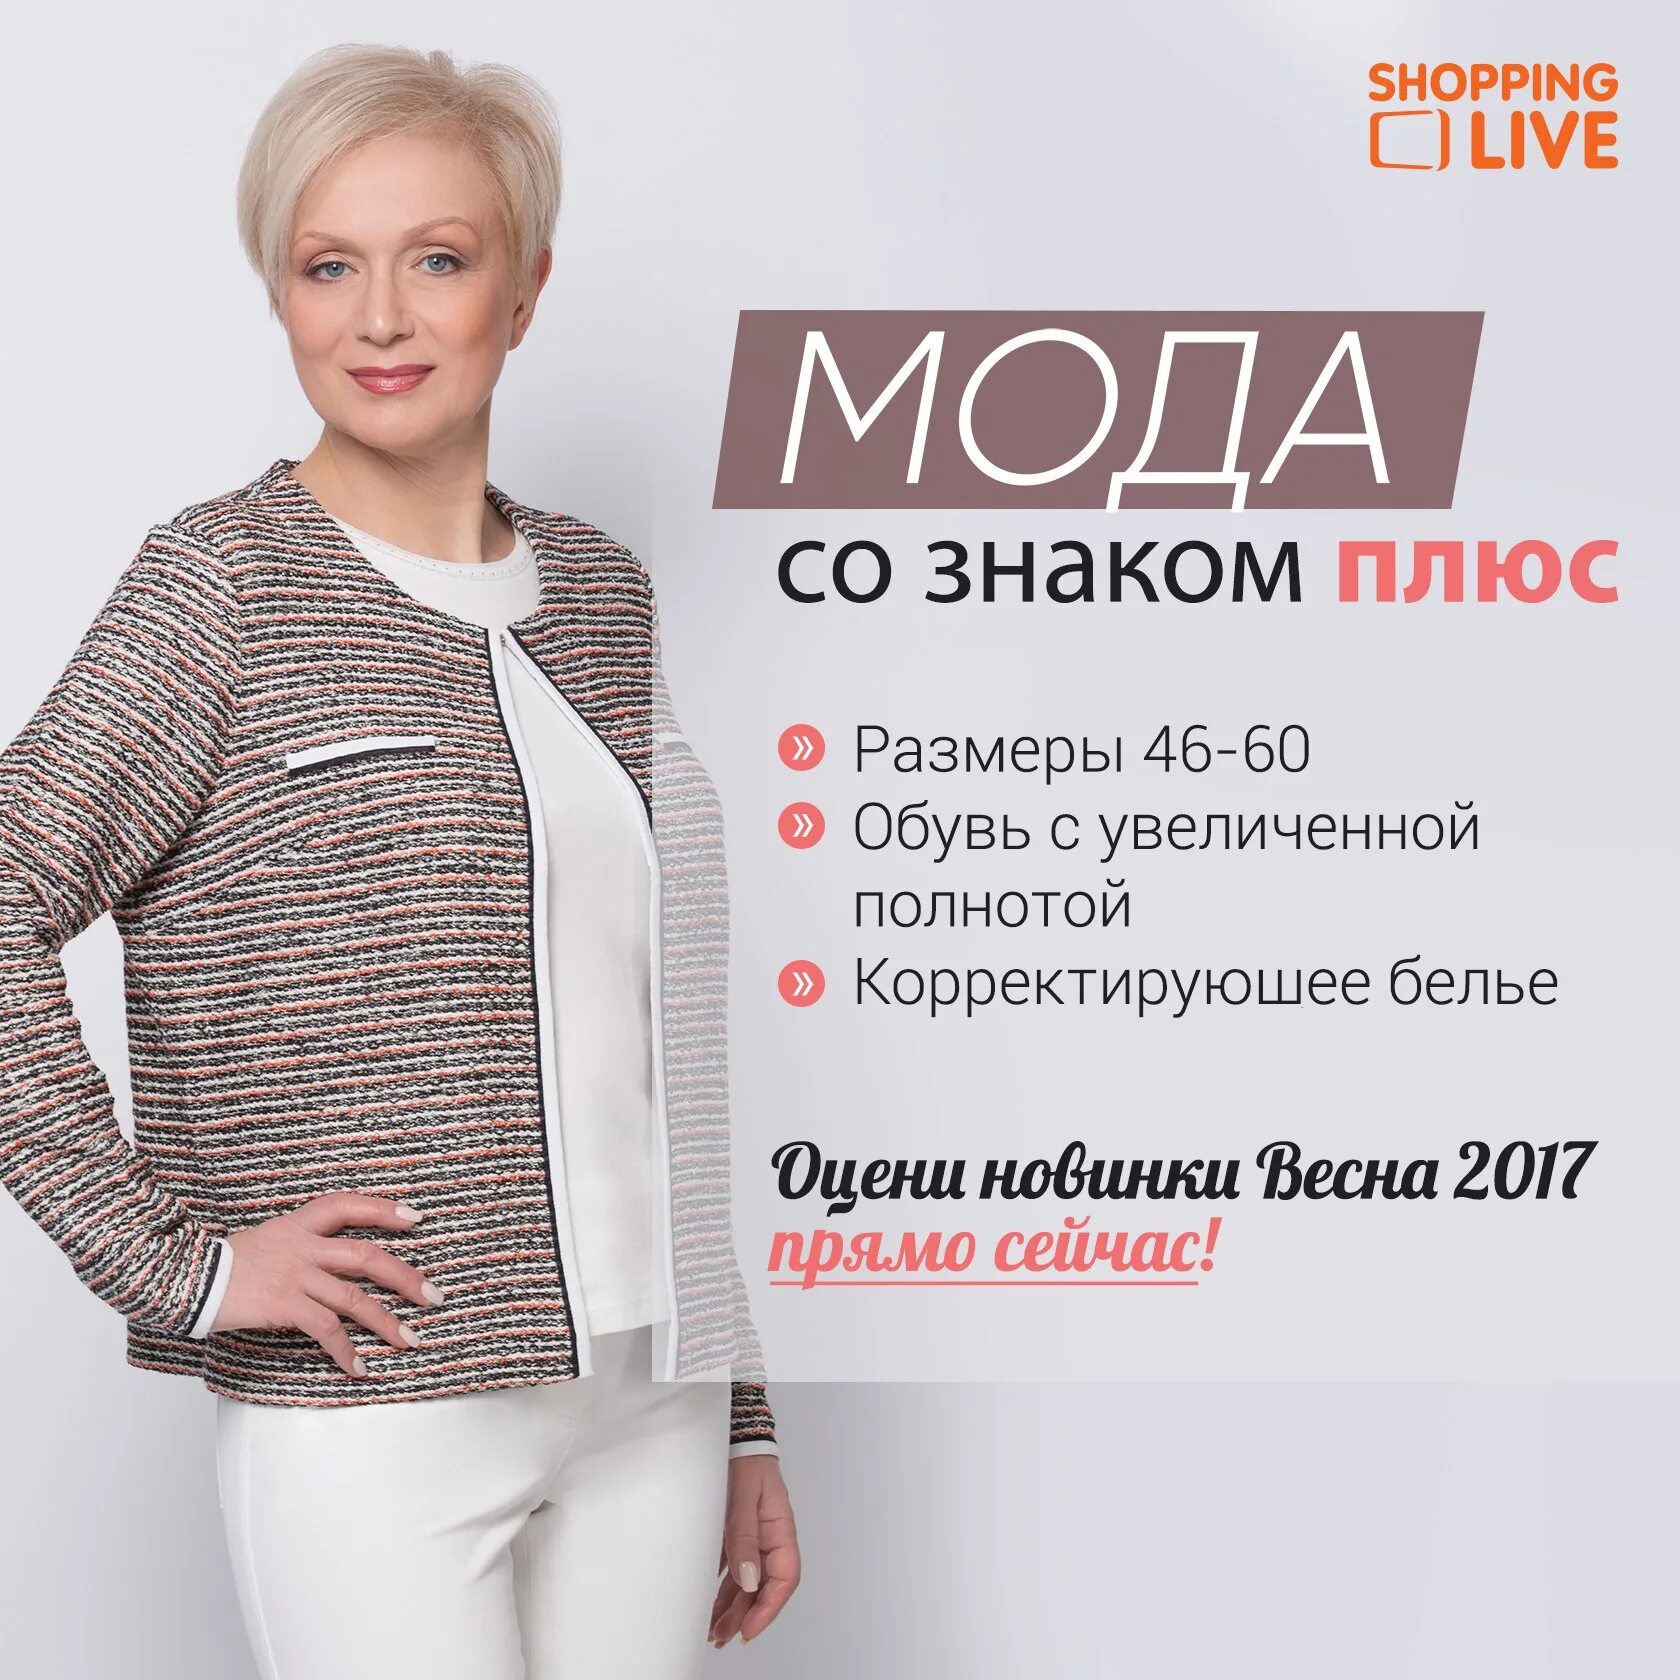 Магазин шопинглайф первый. Shopping Live интернет-магазин. Shopping Live интернет магазин каталог. SHOPPINGLIVE.ru интернет магазин. Каталог одежды.